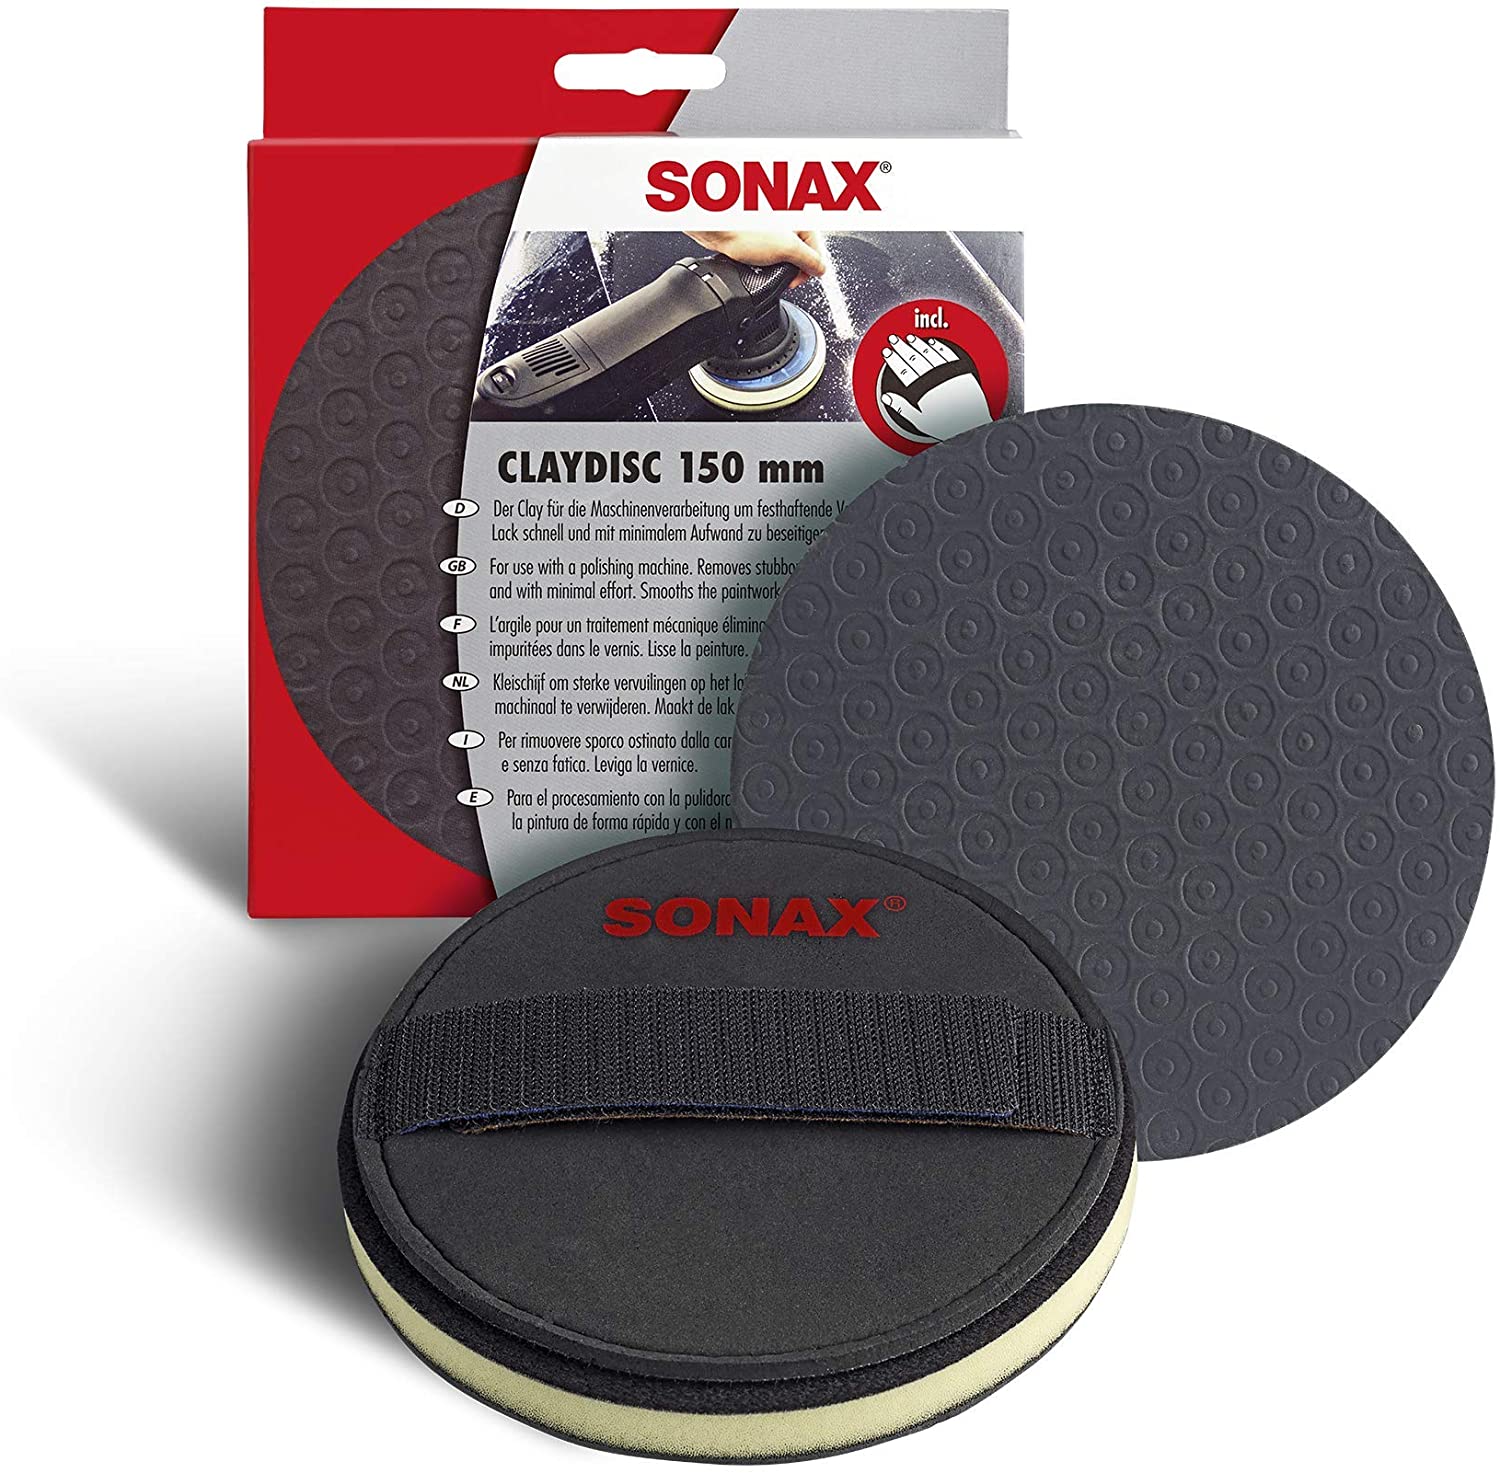 Sonax Clay Disc 150